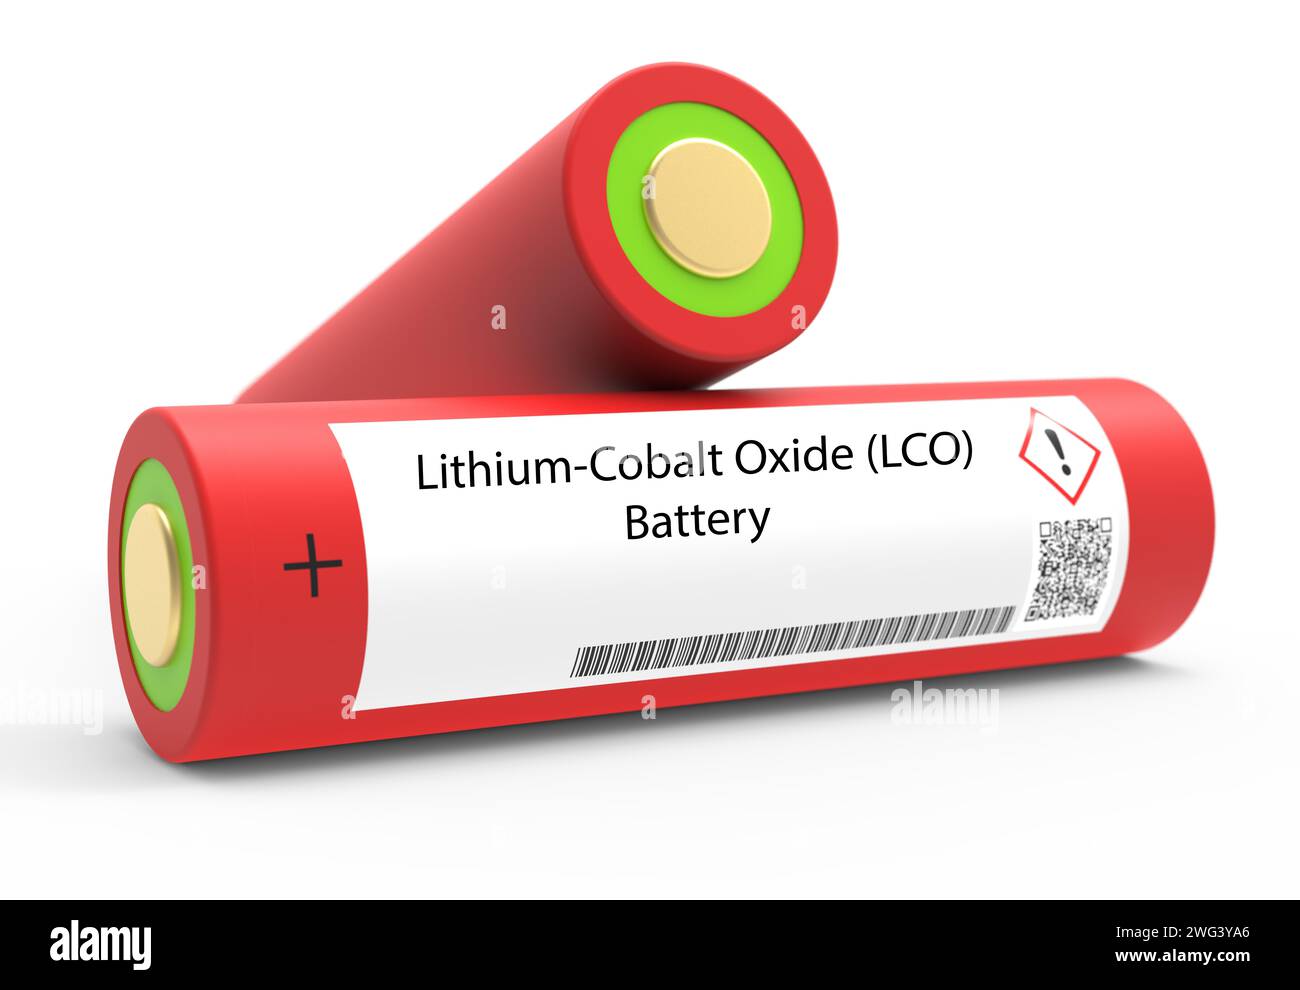 Lithium-cobalt oxide battery Stock Photo